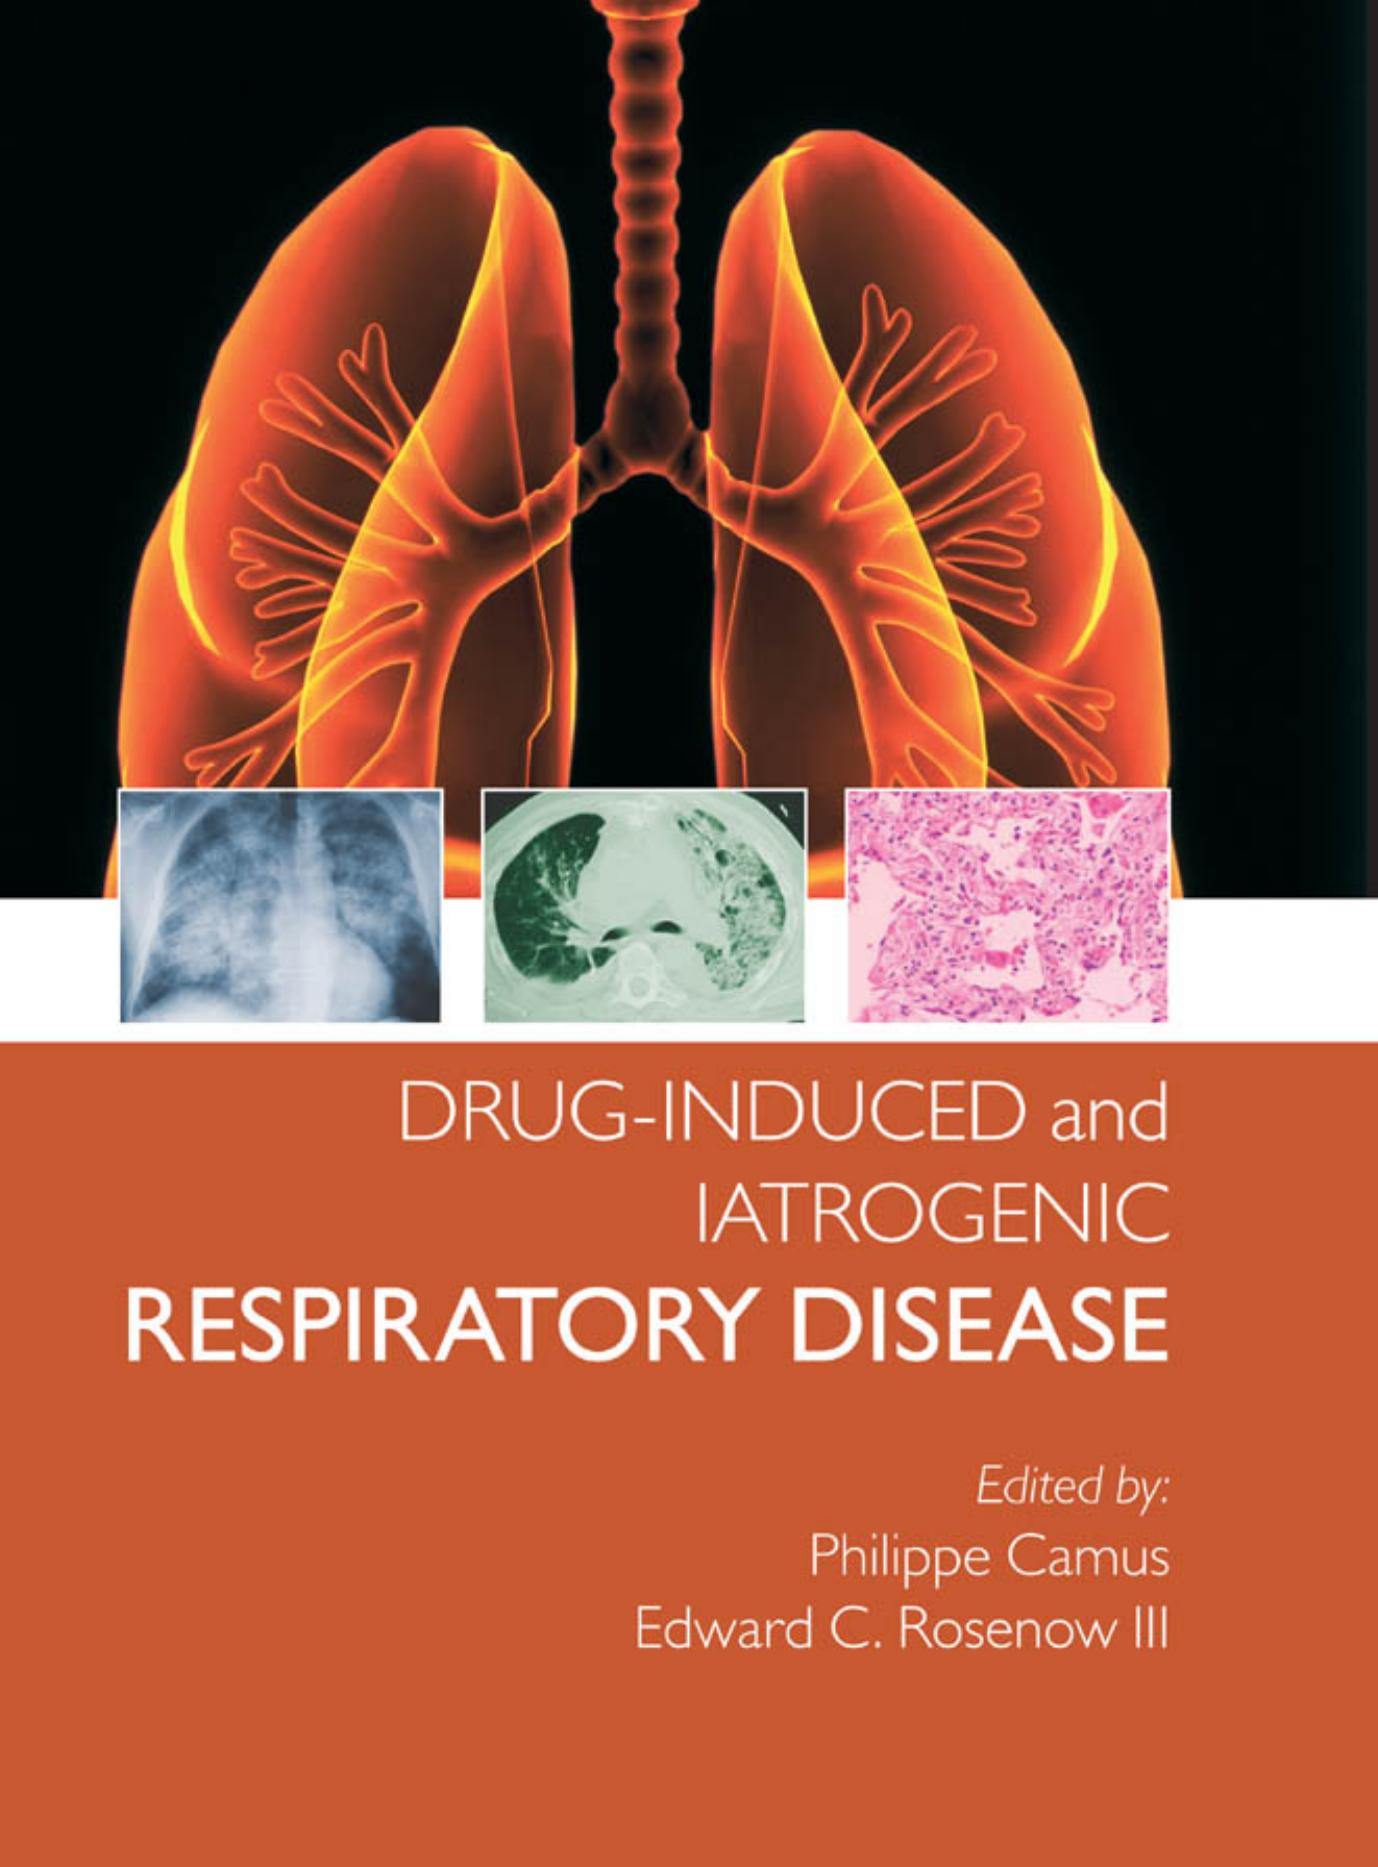 Drug-induced and Iatrogenic Respiratory Disease.jpg